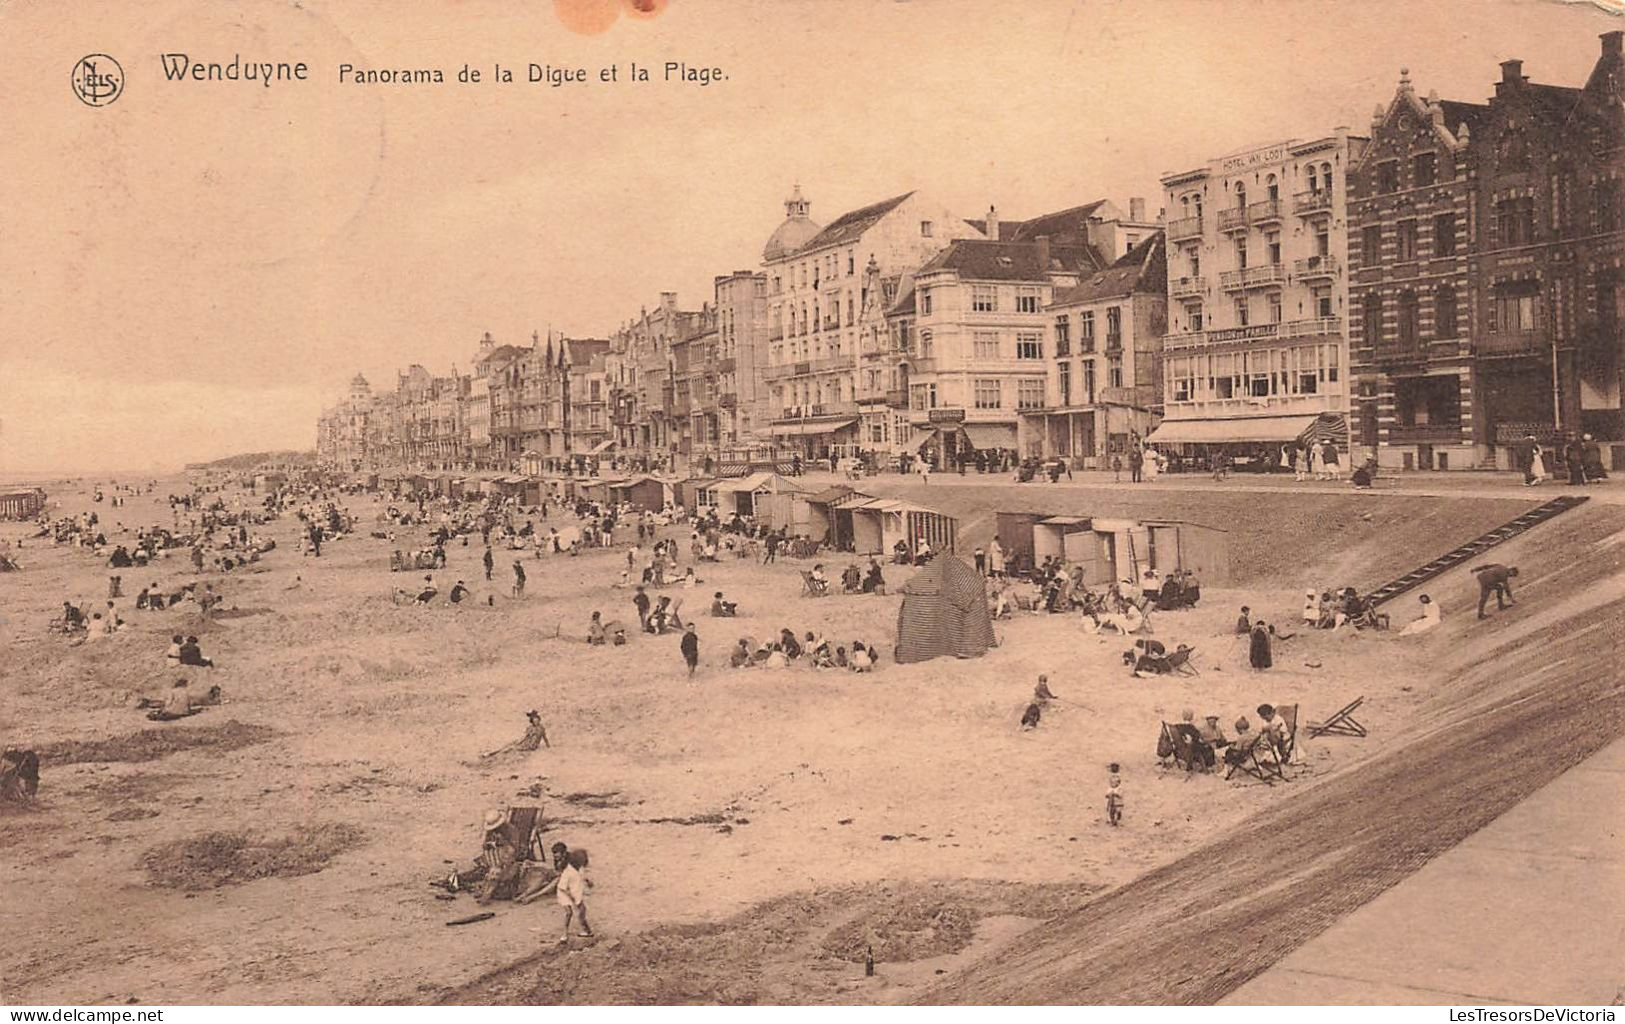 BELGIQUE - Wenduyne - Panorama De La Digue - Plage - Animé - Carte Postale Ancienne - Wenduine